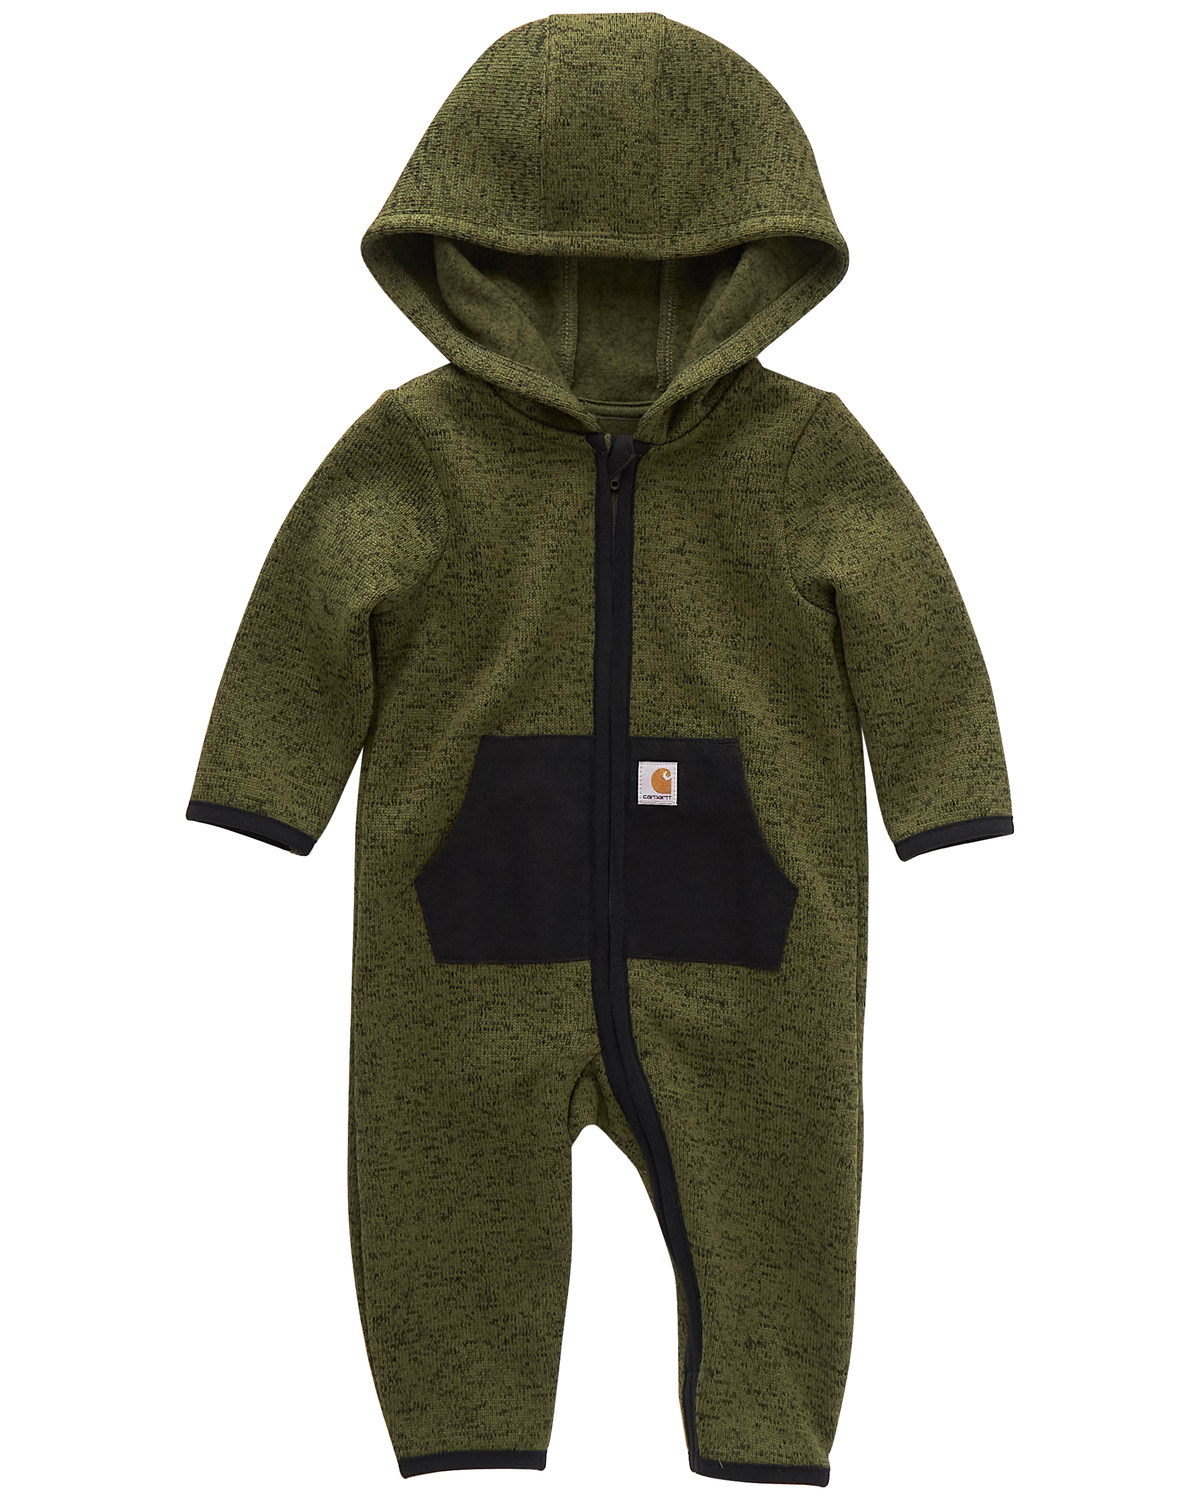 Carhartt Infant Boys' Long Sleeve Hooded Coverall